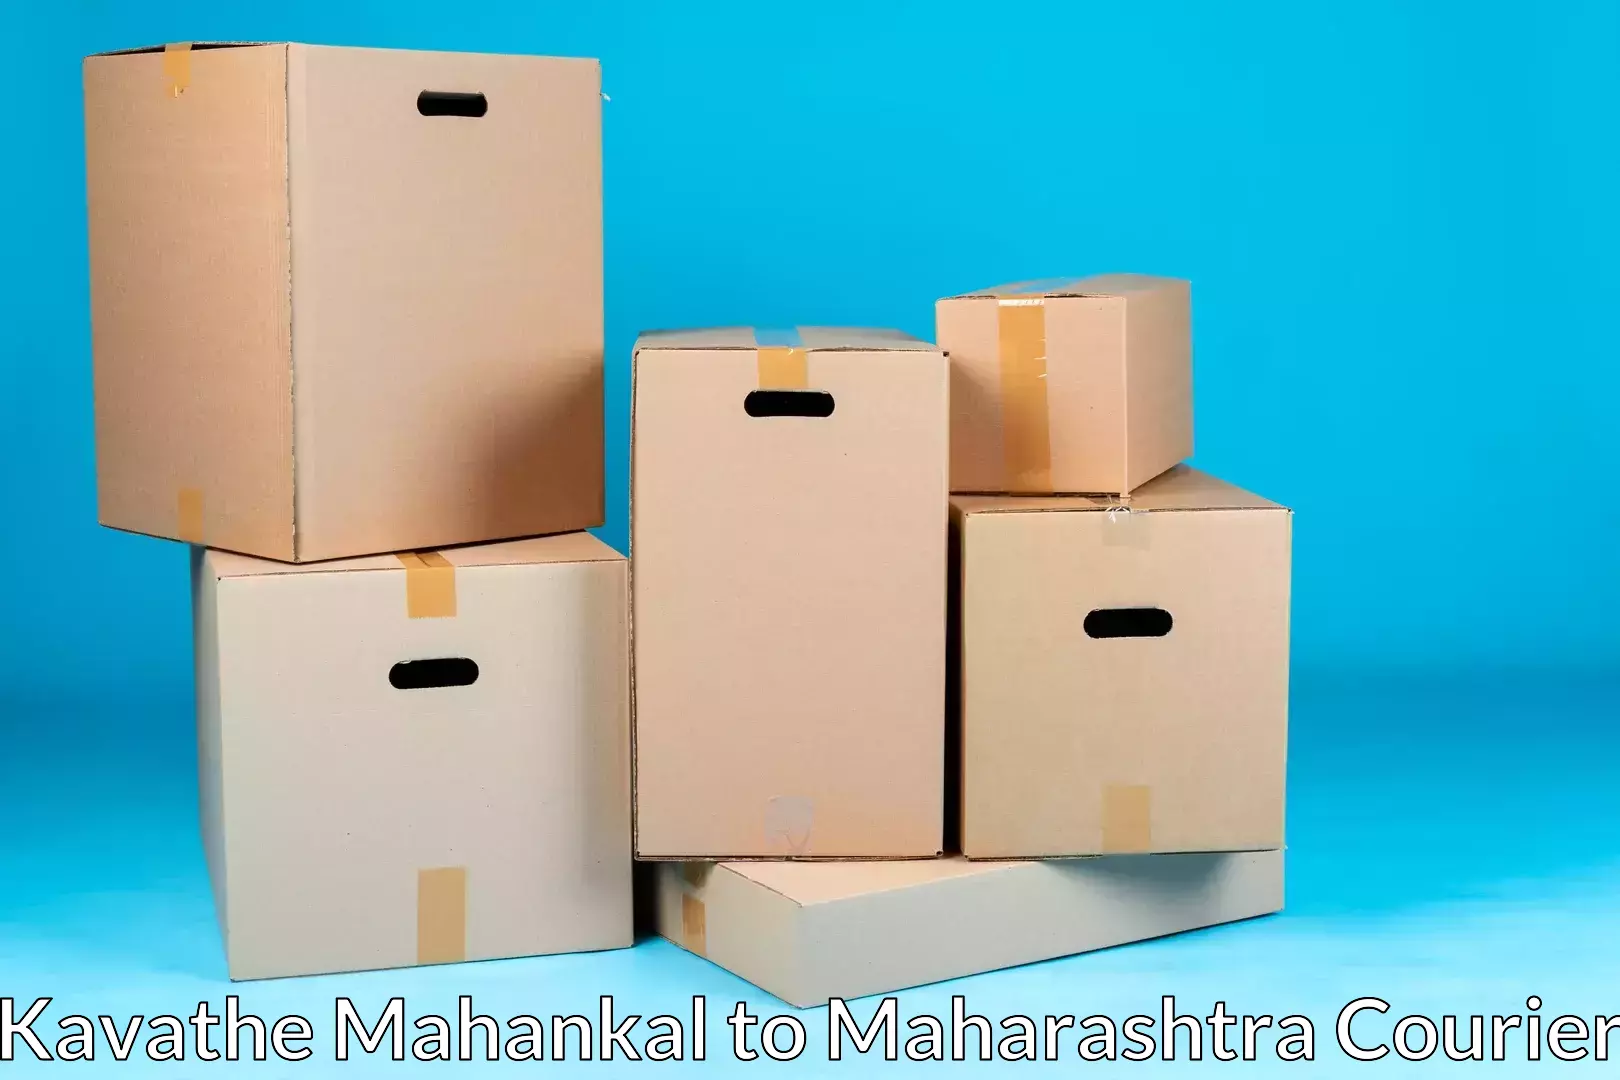 Professional moving company Kavathe Mahankal to Shindkheda